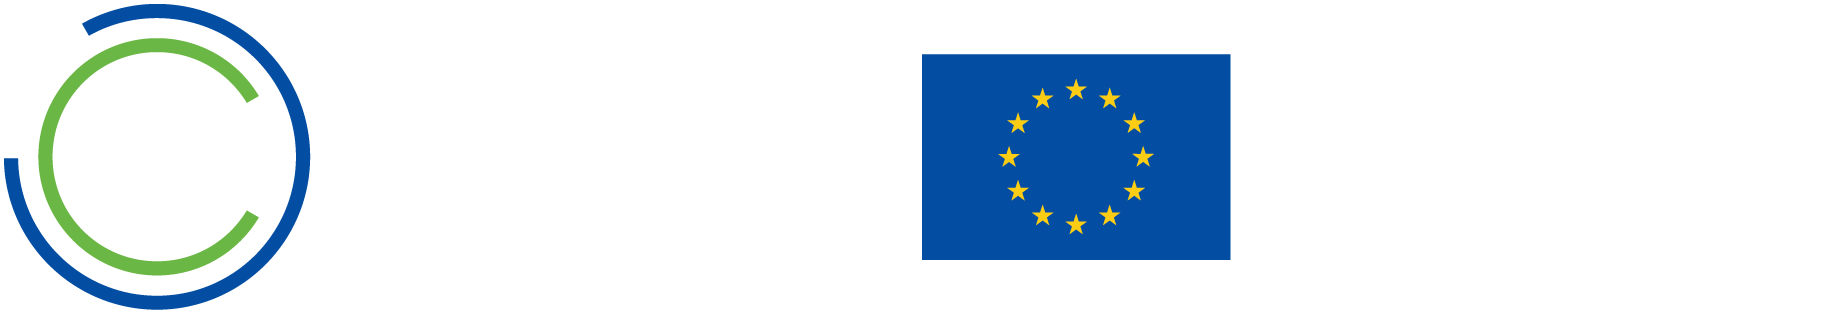 EIT Food + EU Logo RGB Landscape_WhiteLetters_keylineEUflag